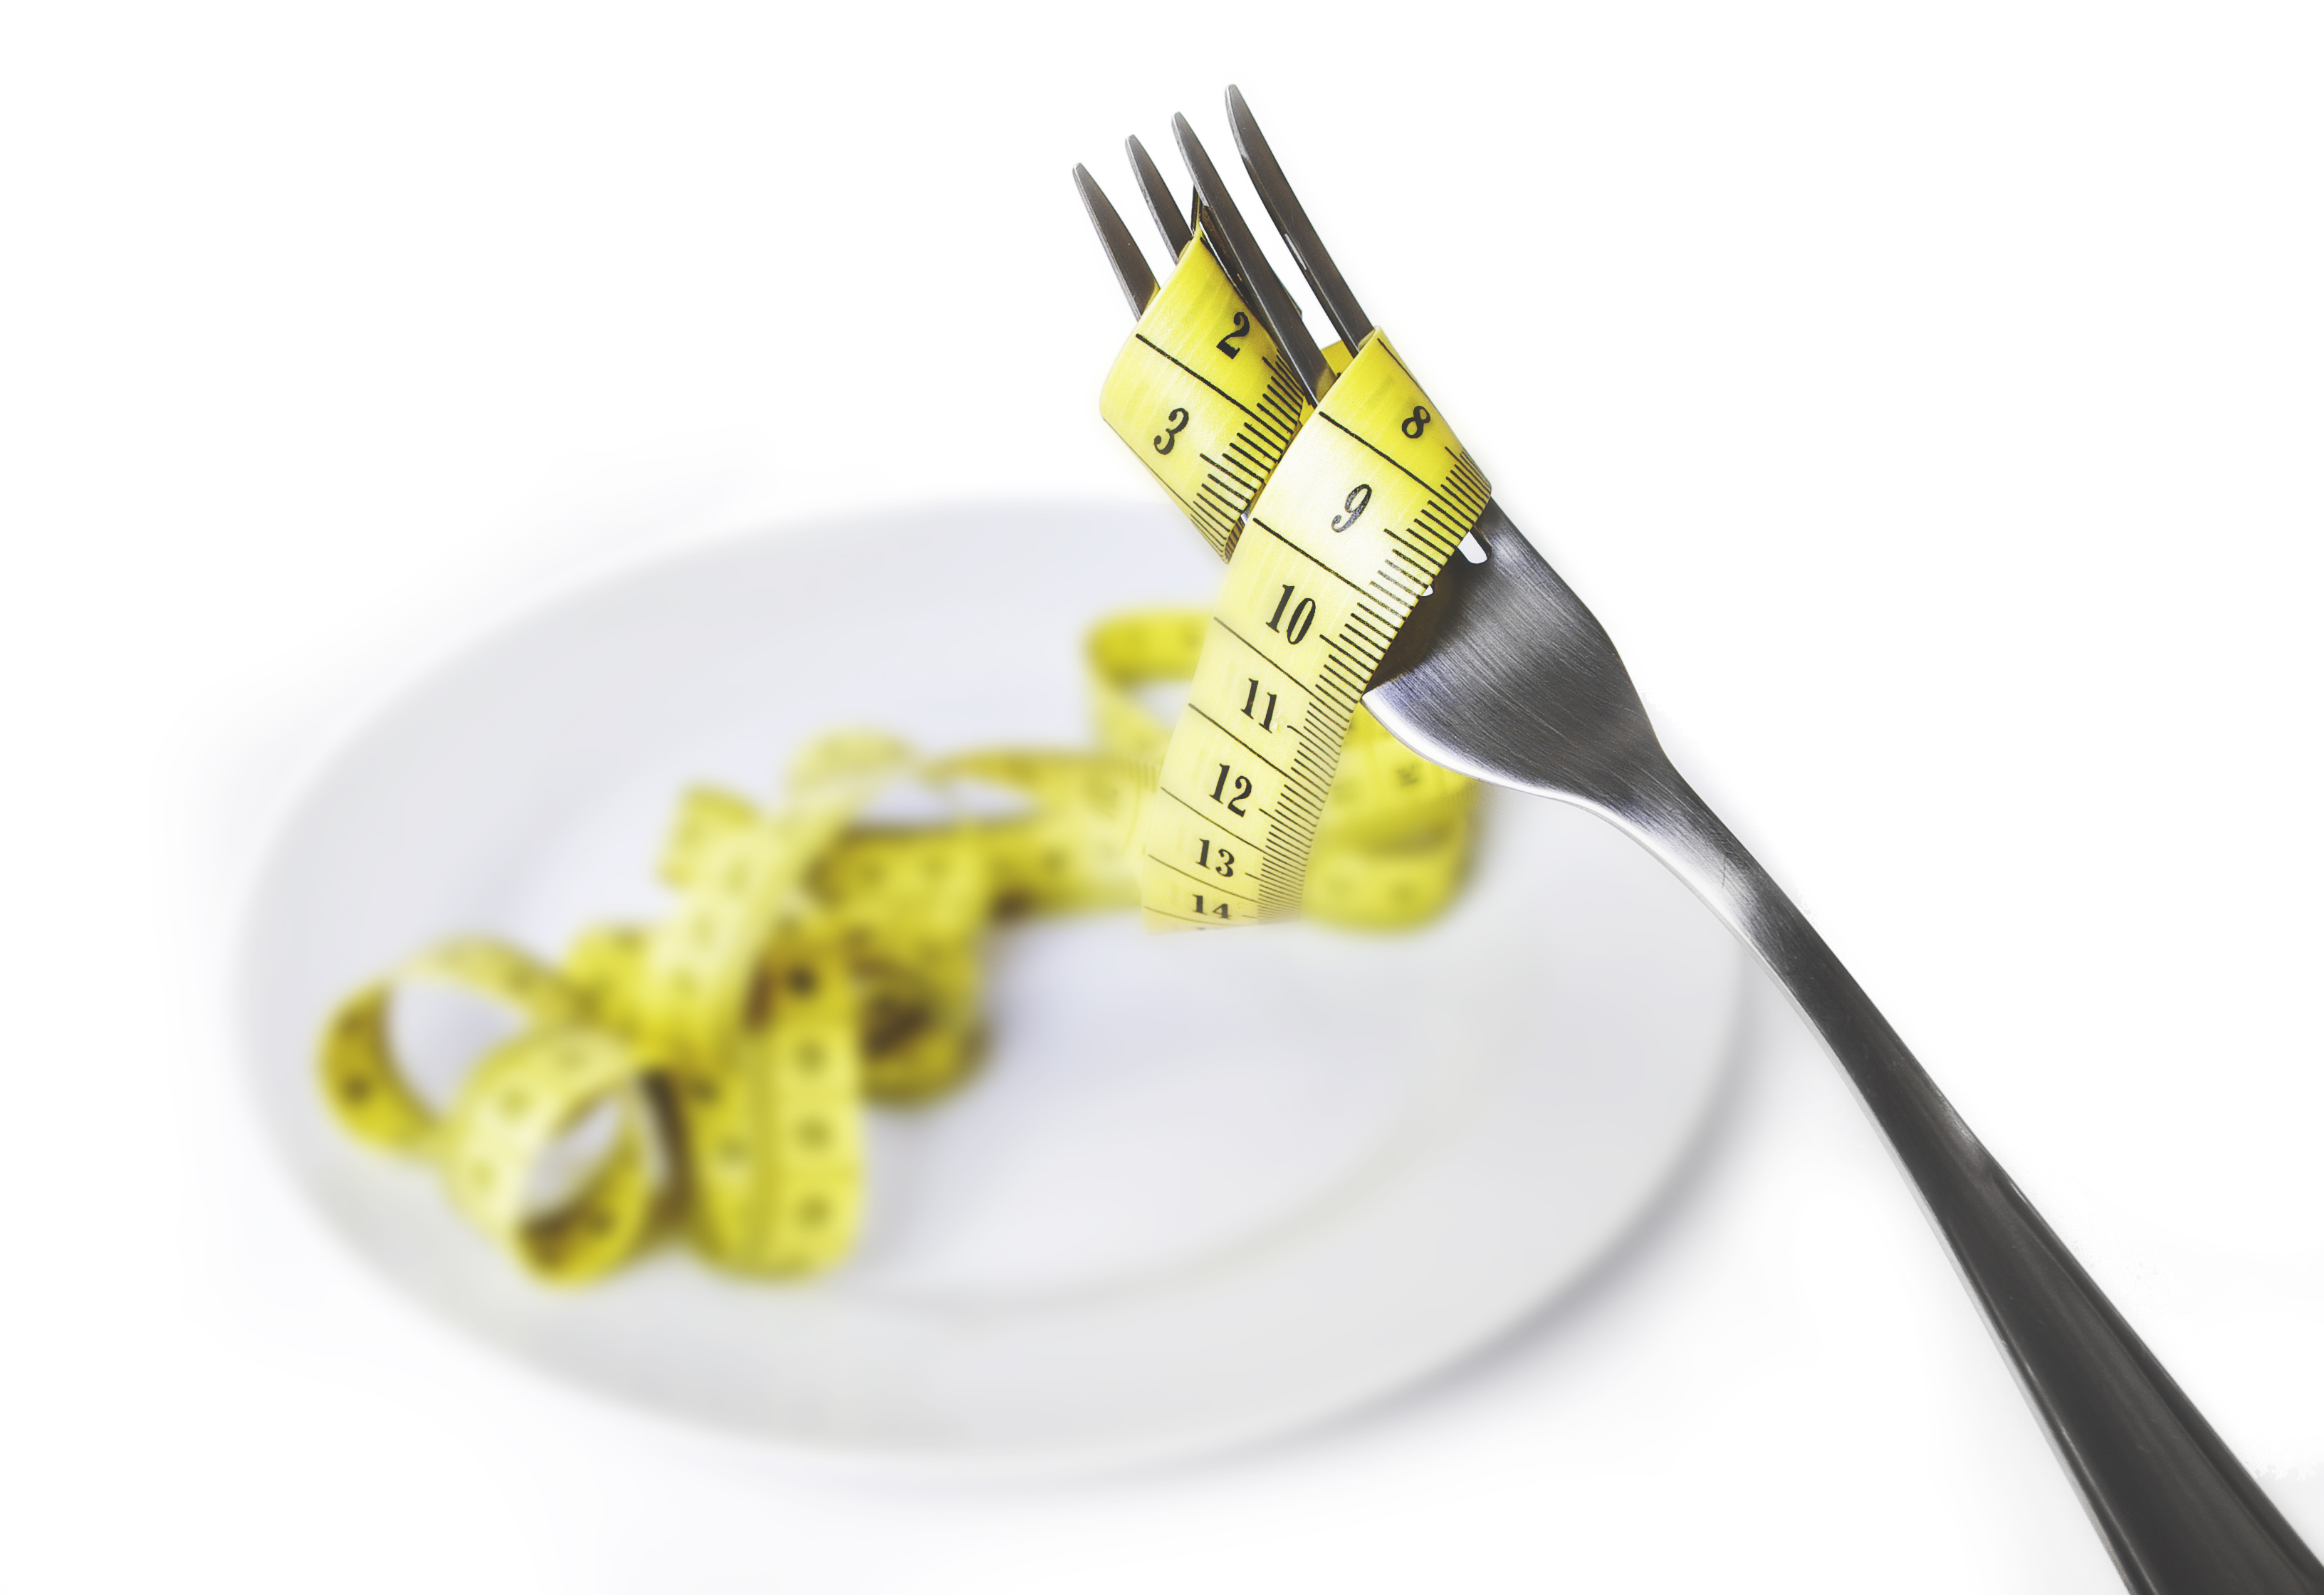 Image symbolizing an eating disorder